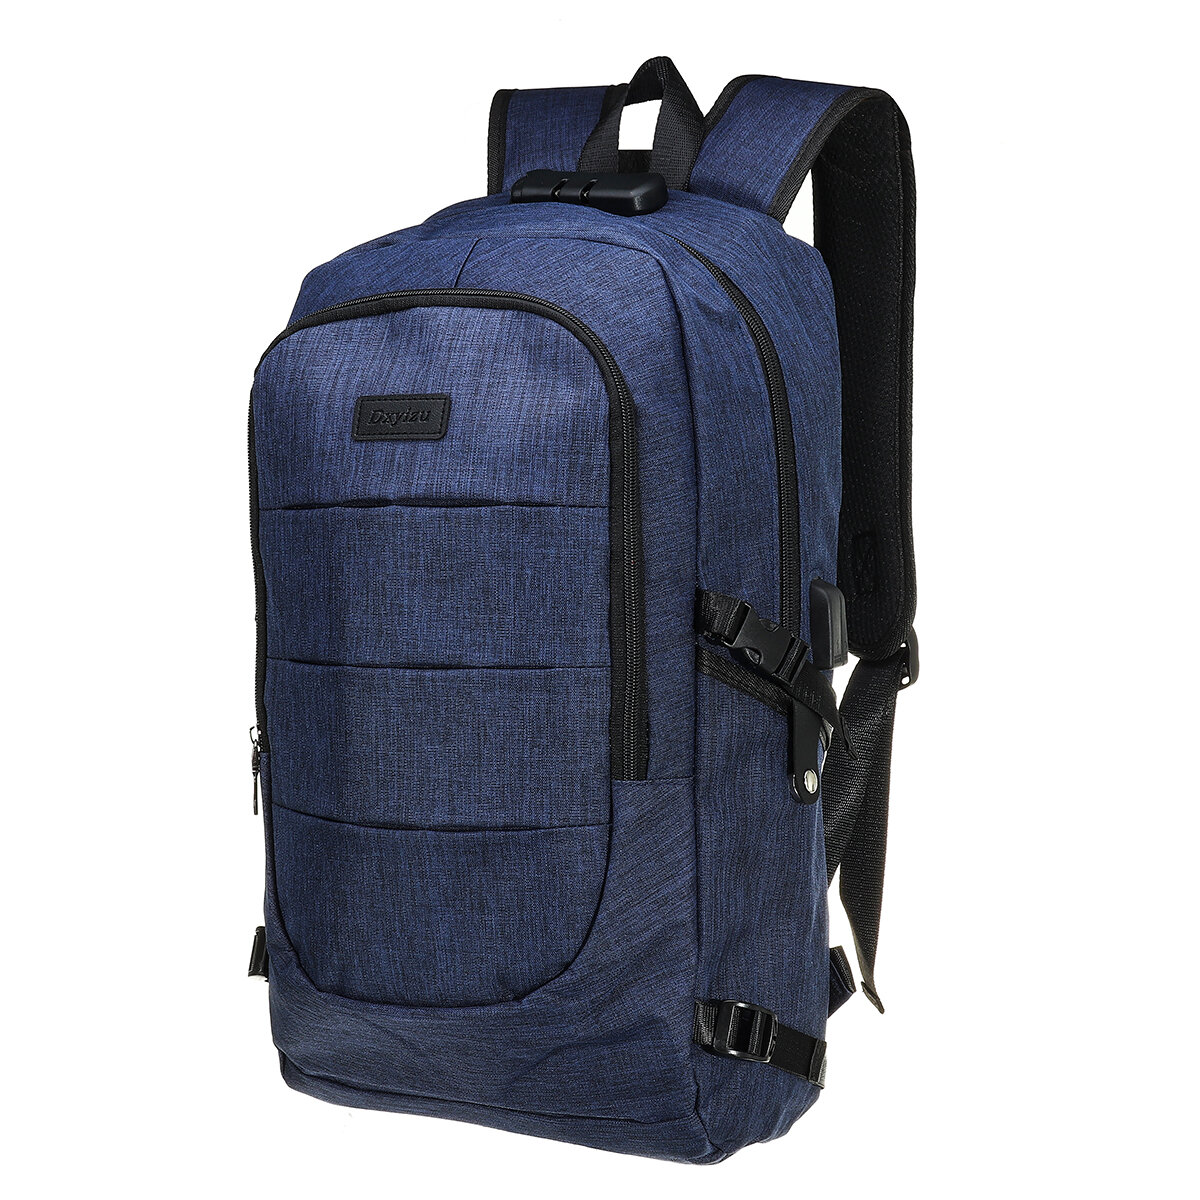 Unisex Anti-Theft Laptop Backpack Travel Business School Bag Rucksack With Safe Lock + USB Port 